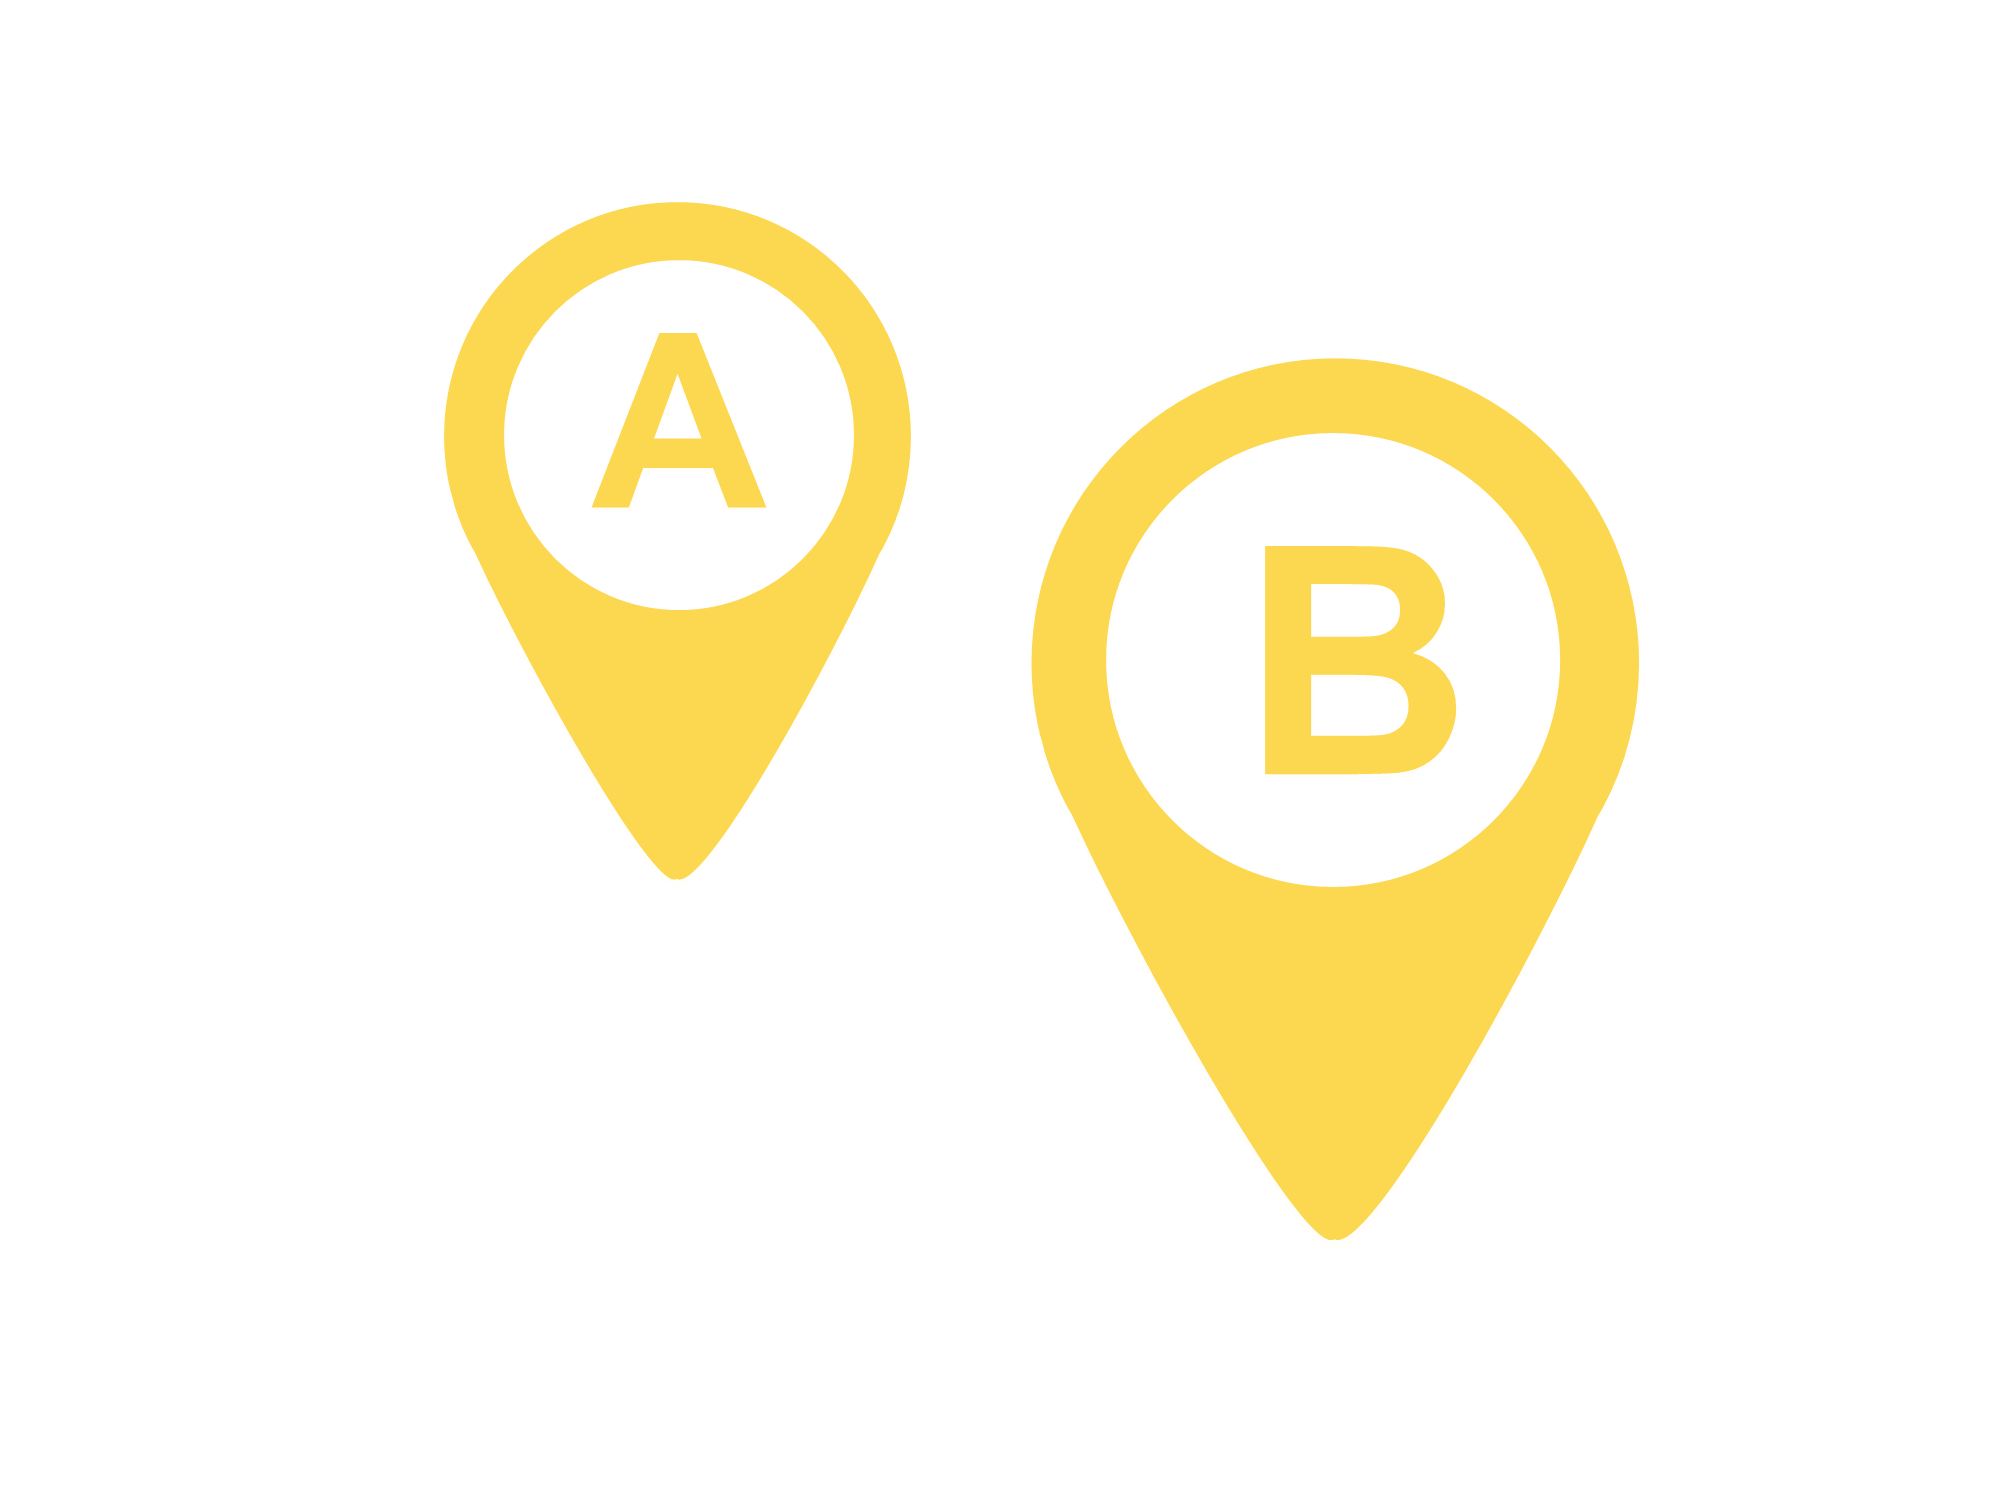 Trip destination A and B icon